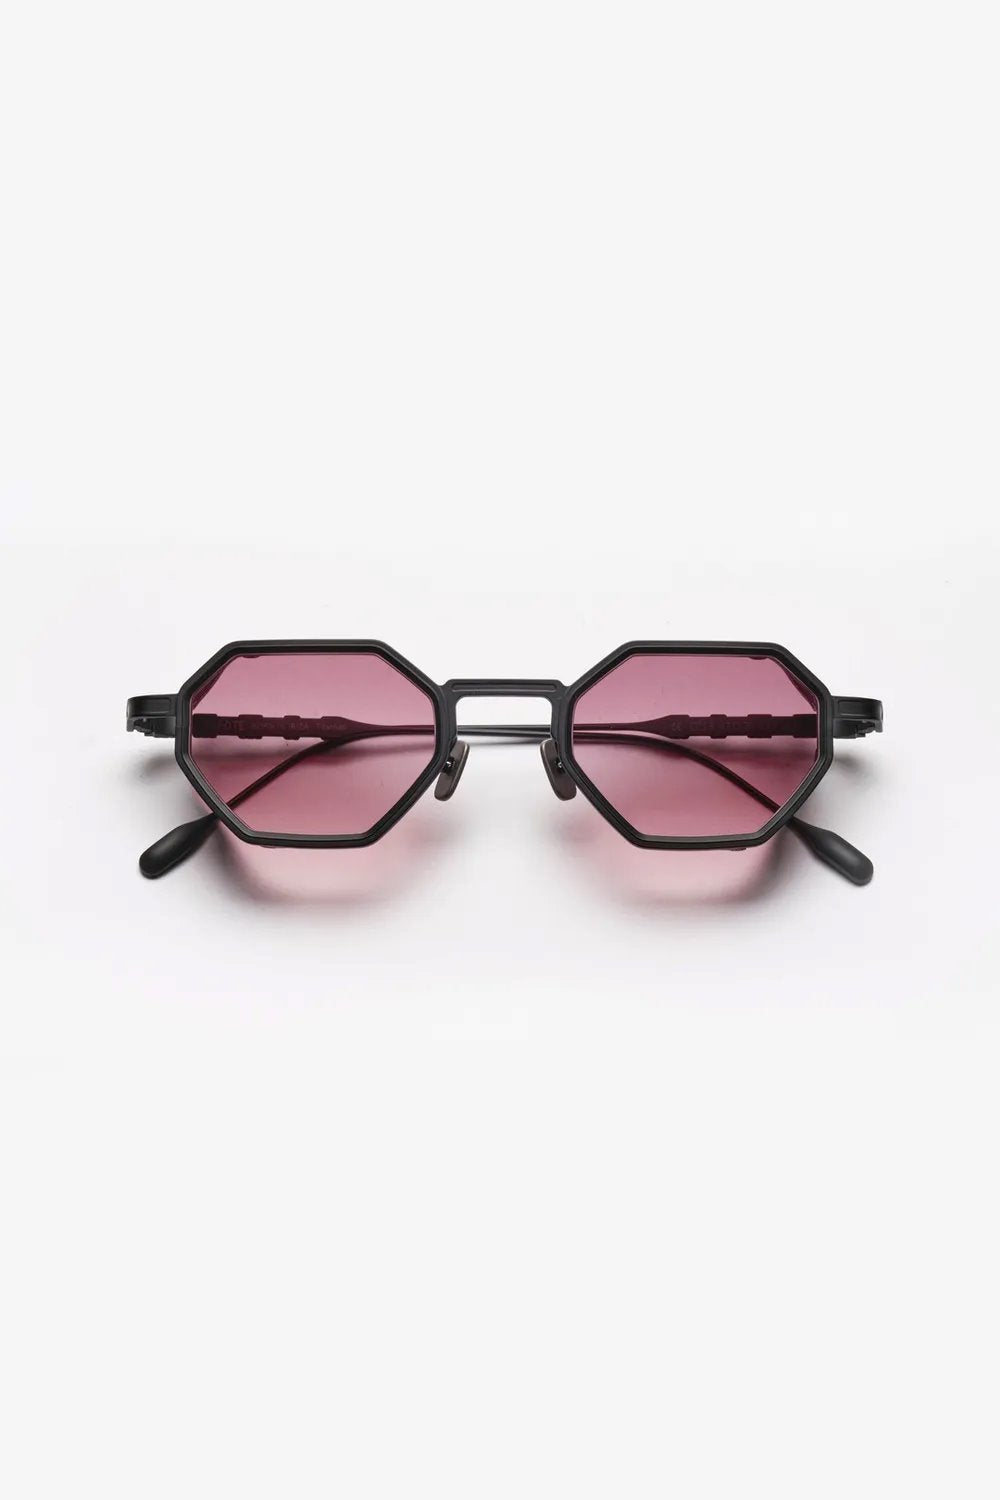 Capote - CC13 Sunglasses Capote Pink ONES 